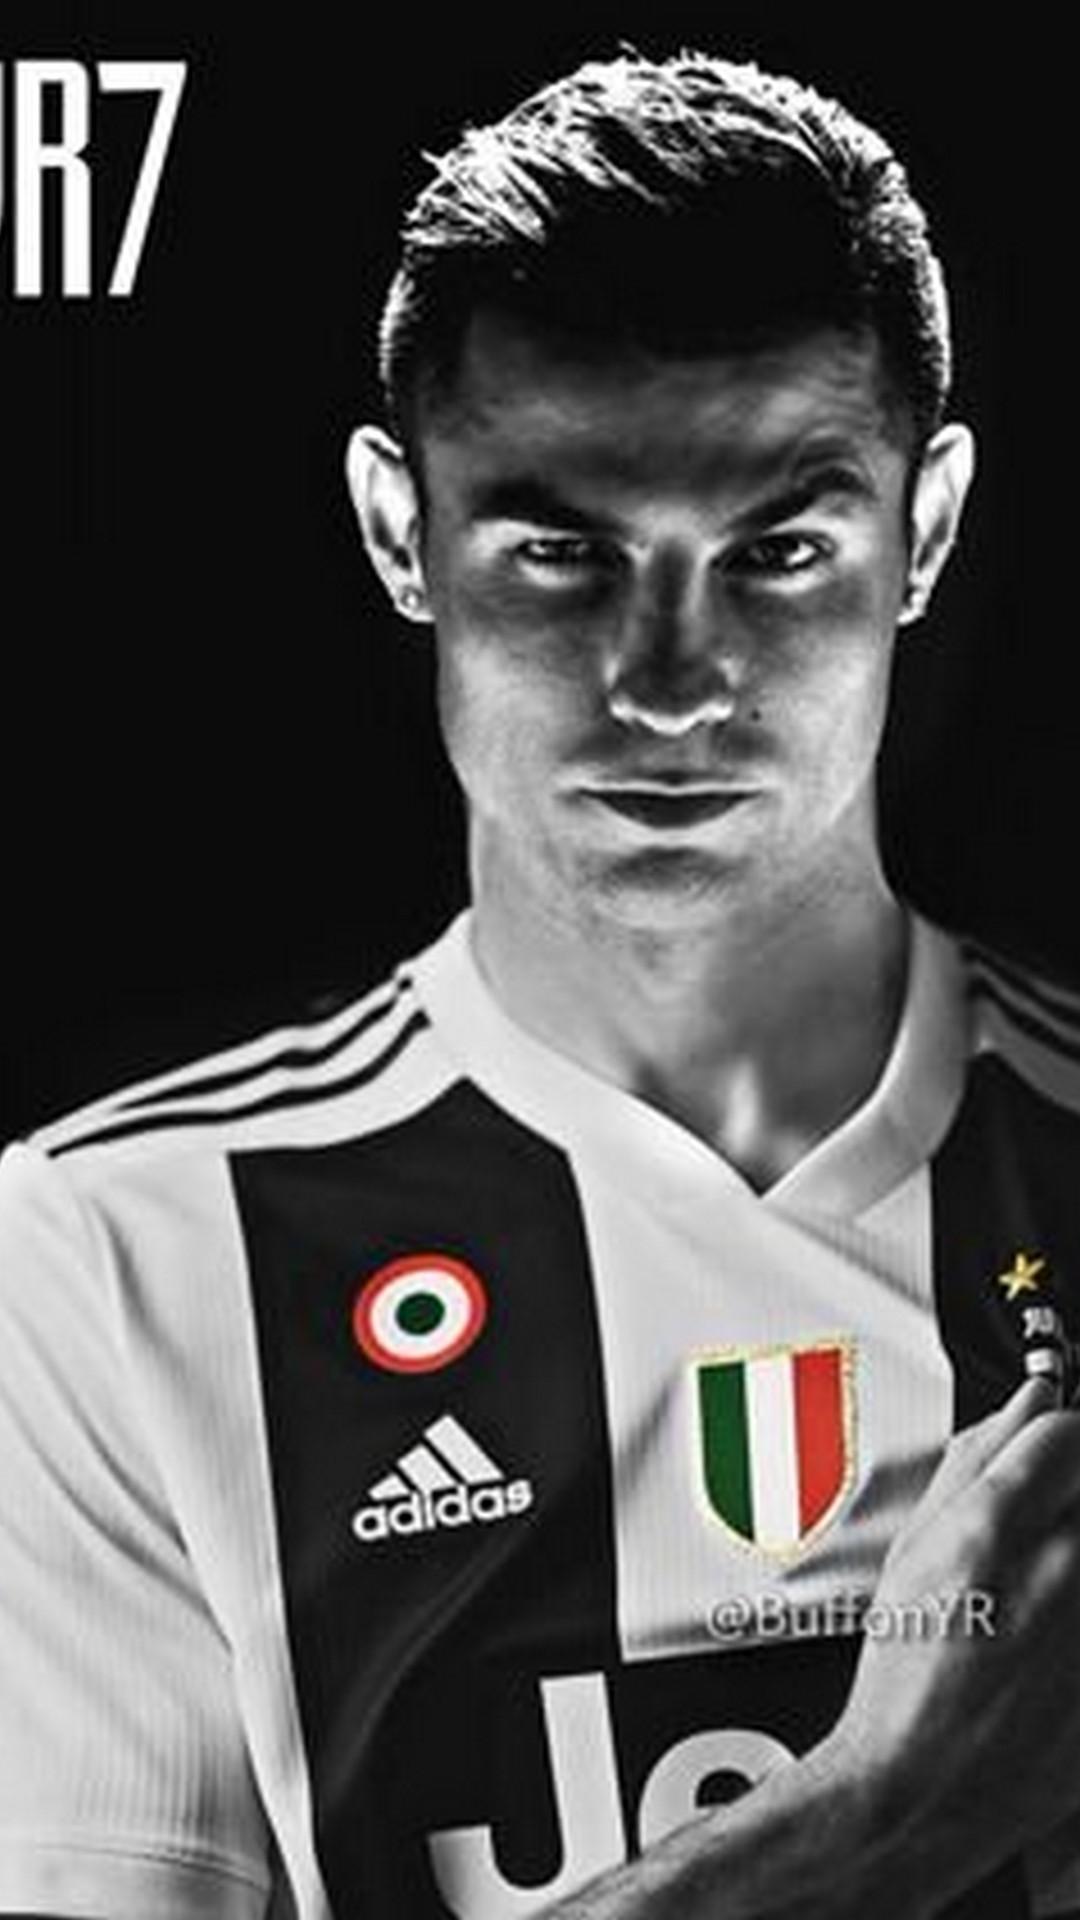 Cristiano Ronaldo Juventus Wallpaper Android Android